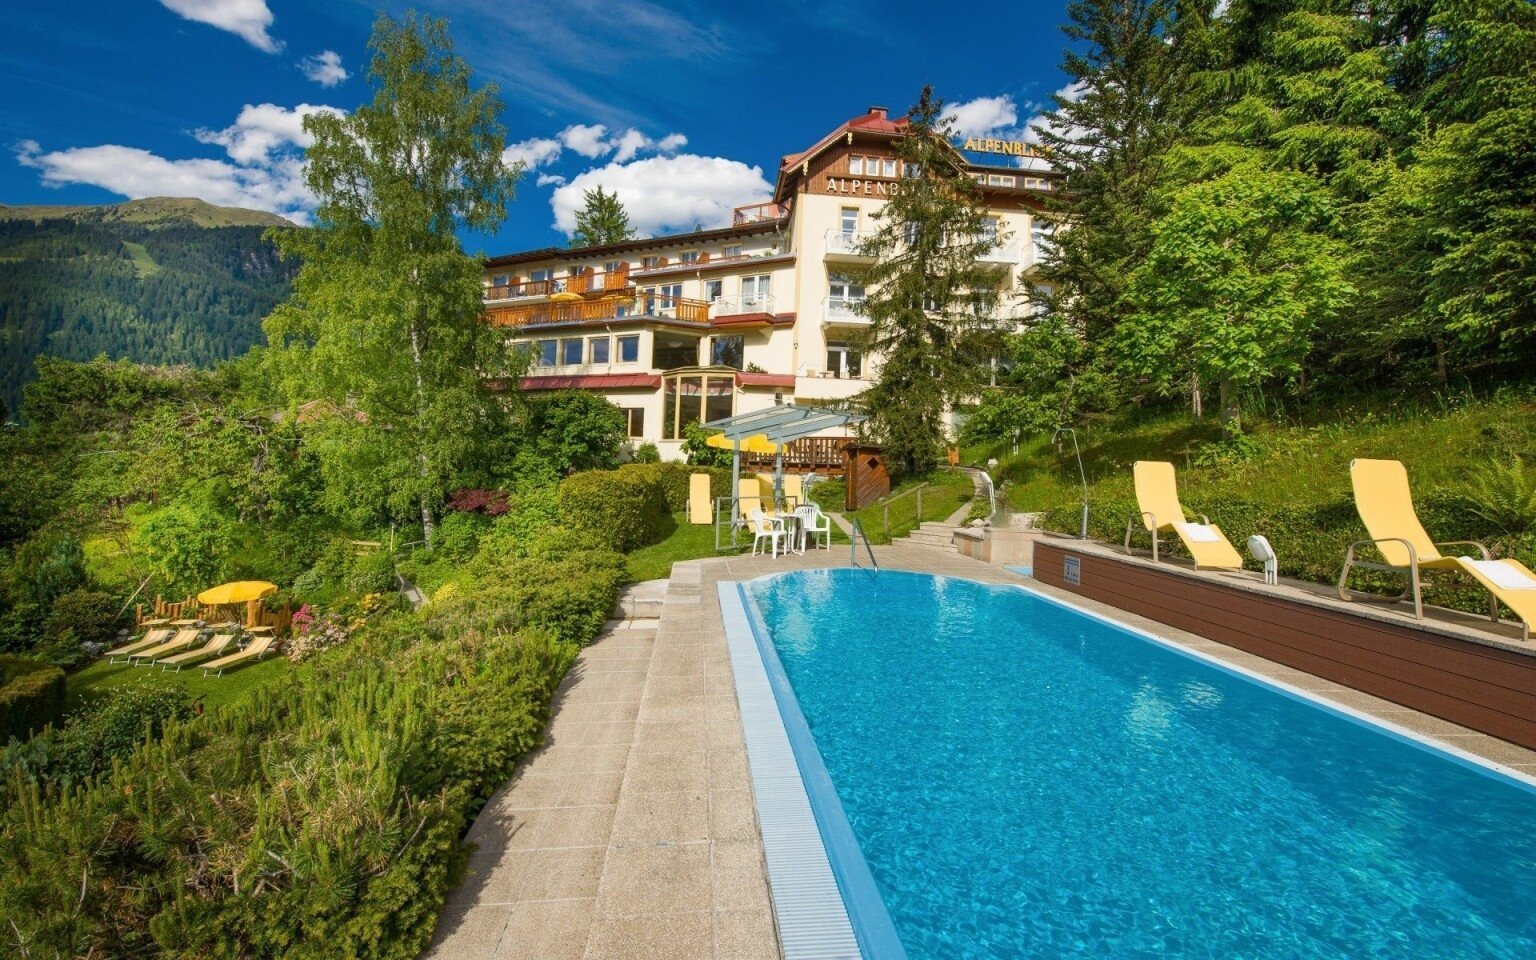 Rakúske Alpy: Jar a leto v Hoteli Alpenblick *** s bohatým wellness, termálnym bazénom a polpenziou + vyžitie<br/>Hotel Alpenblick ***, Kötschachtaler Straße 17, Bad Gastein 5640, info@alpenblick-gastein.at